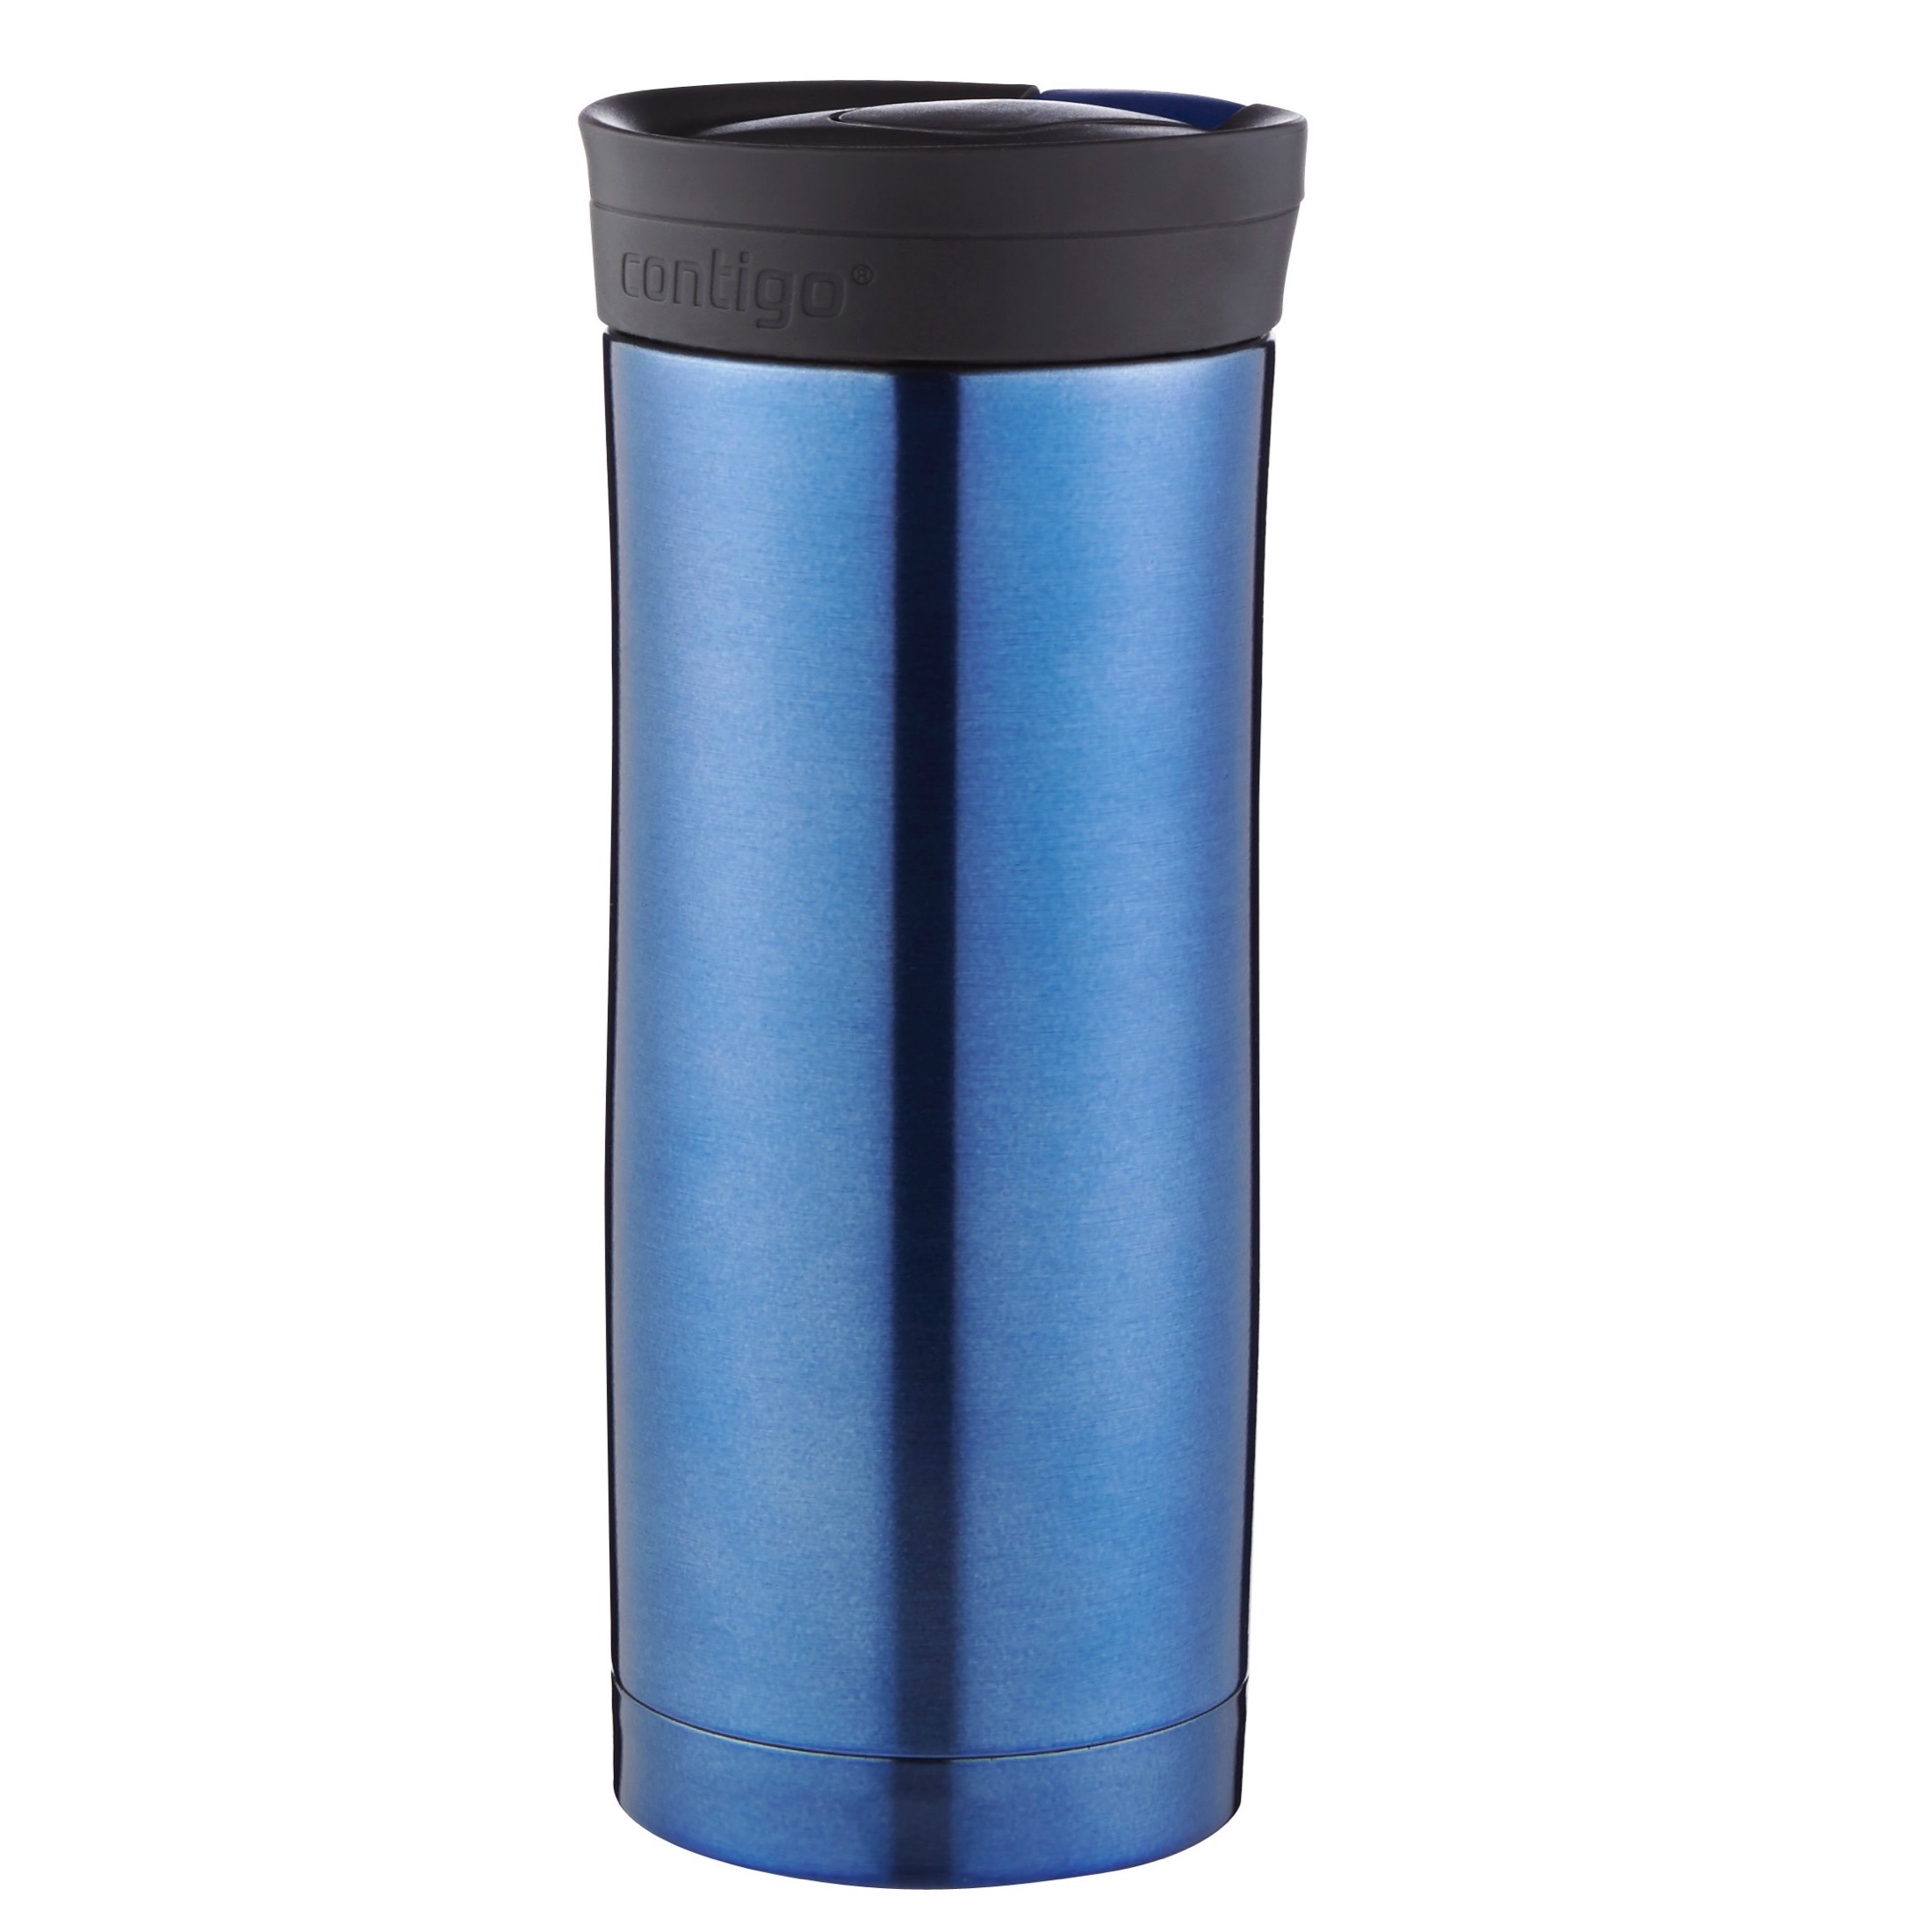 Contigo Byron Stainless Steel Travel Mug with SNAPSEAL Lid Monaco Blue, 16 fl oz. - image 2 of 2